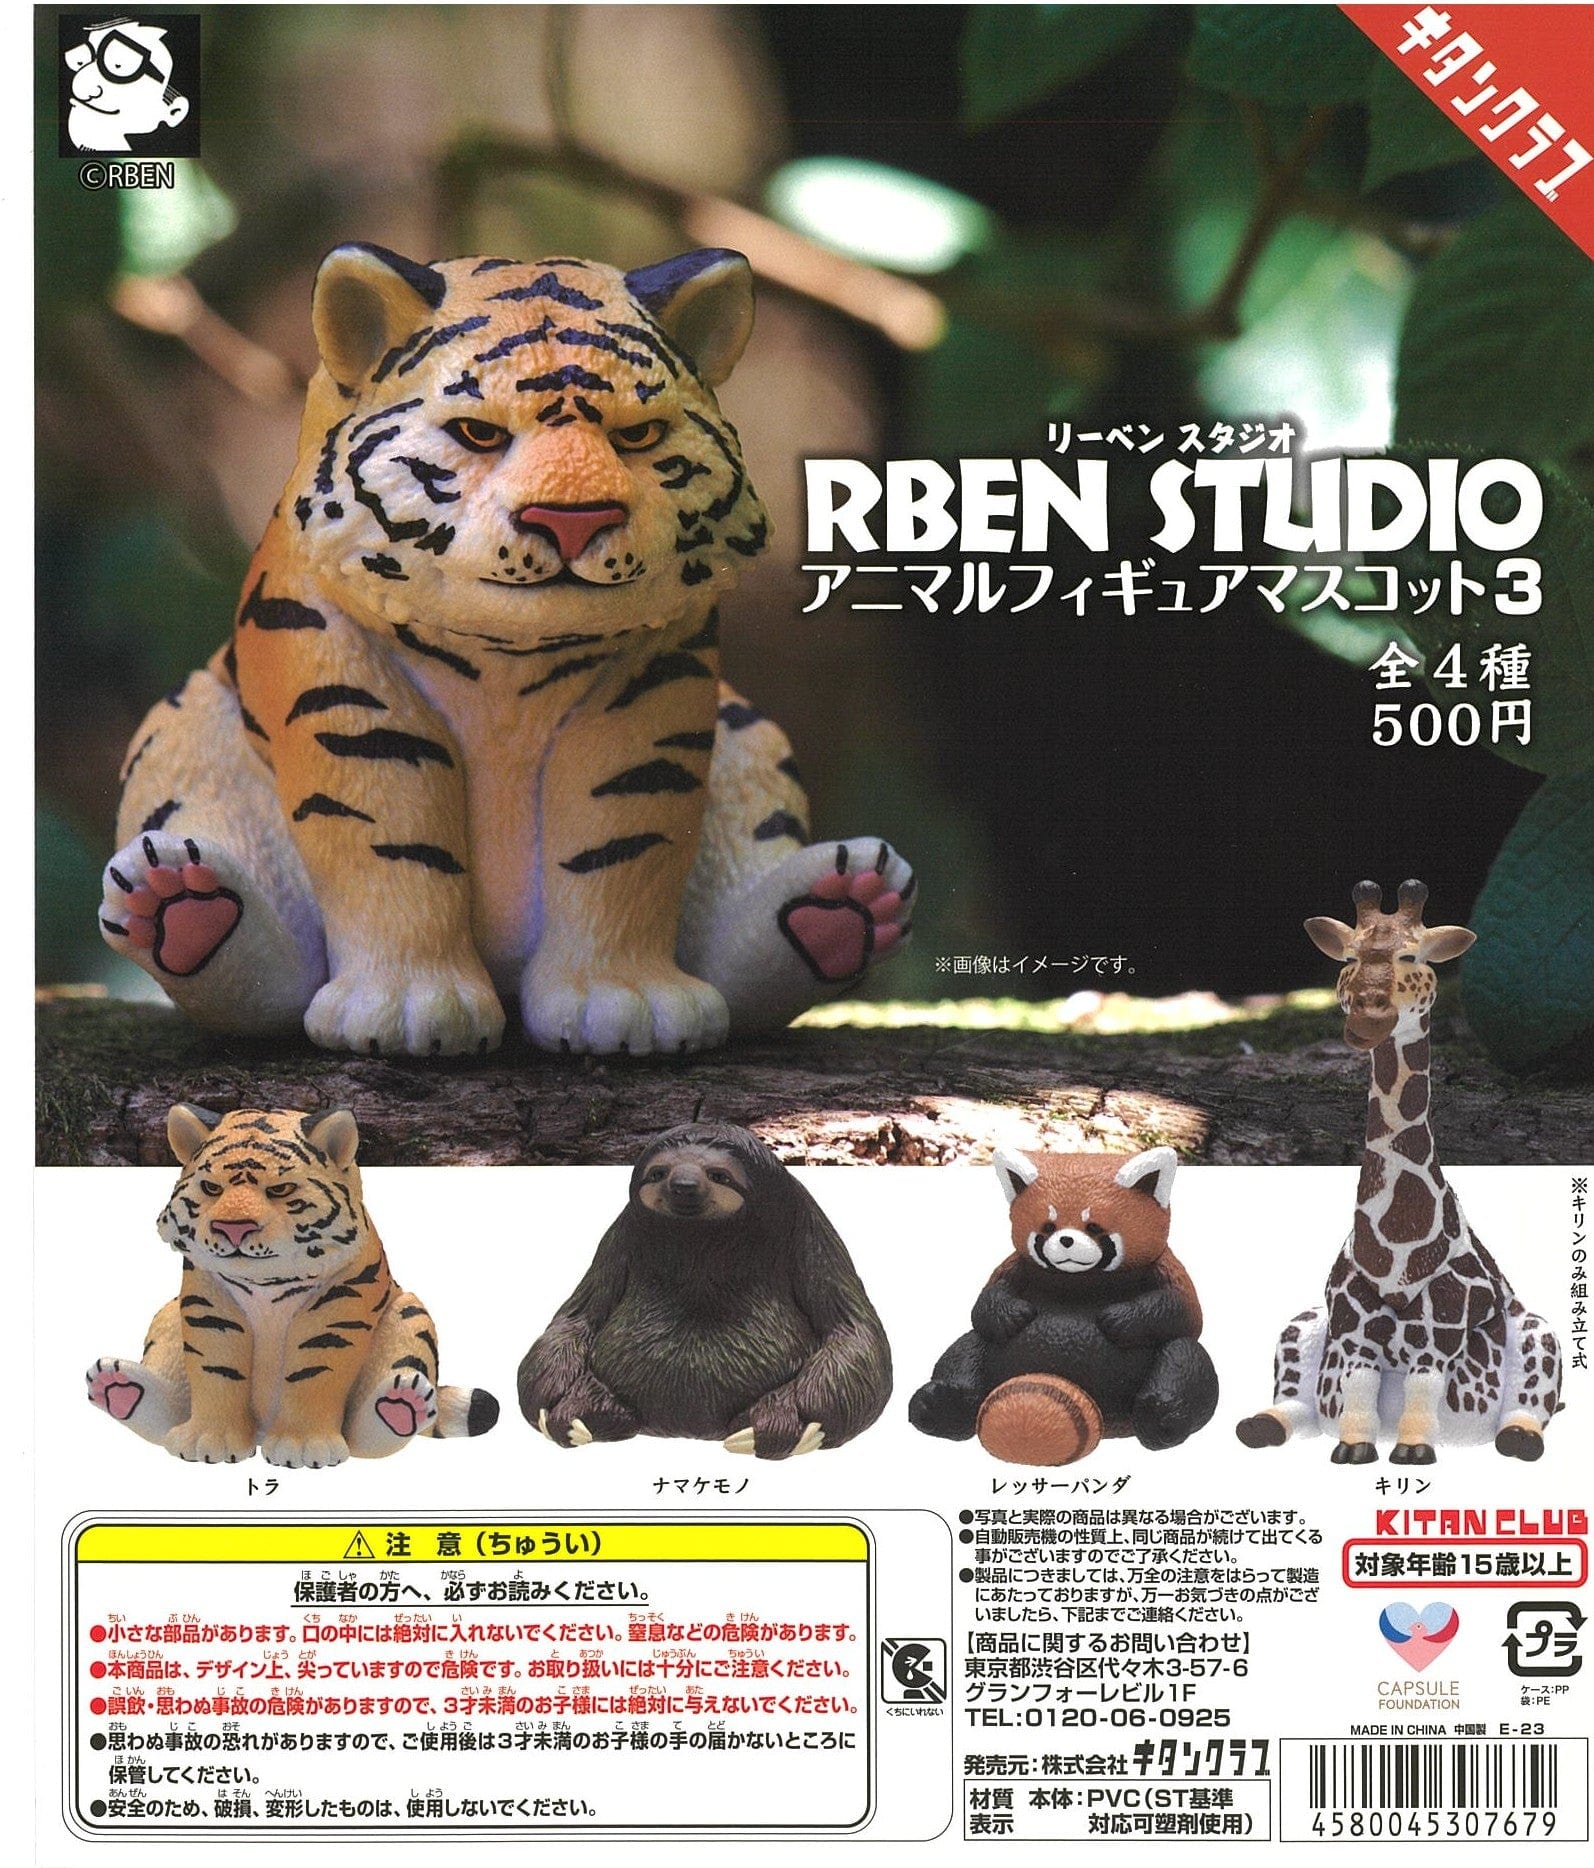 Kitan Club CP2329 Rben Studio Animal Figure Mascot 3